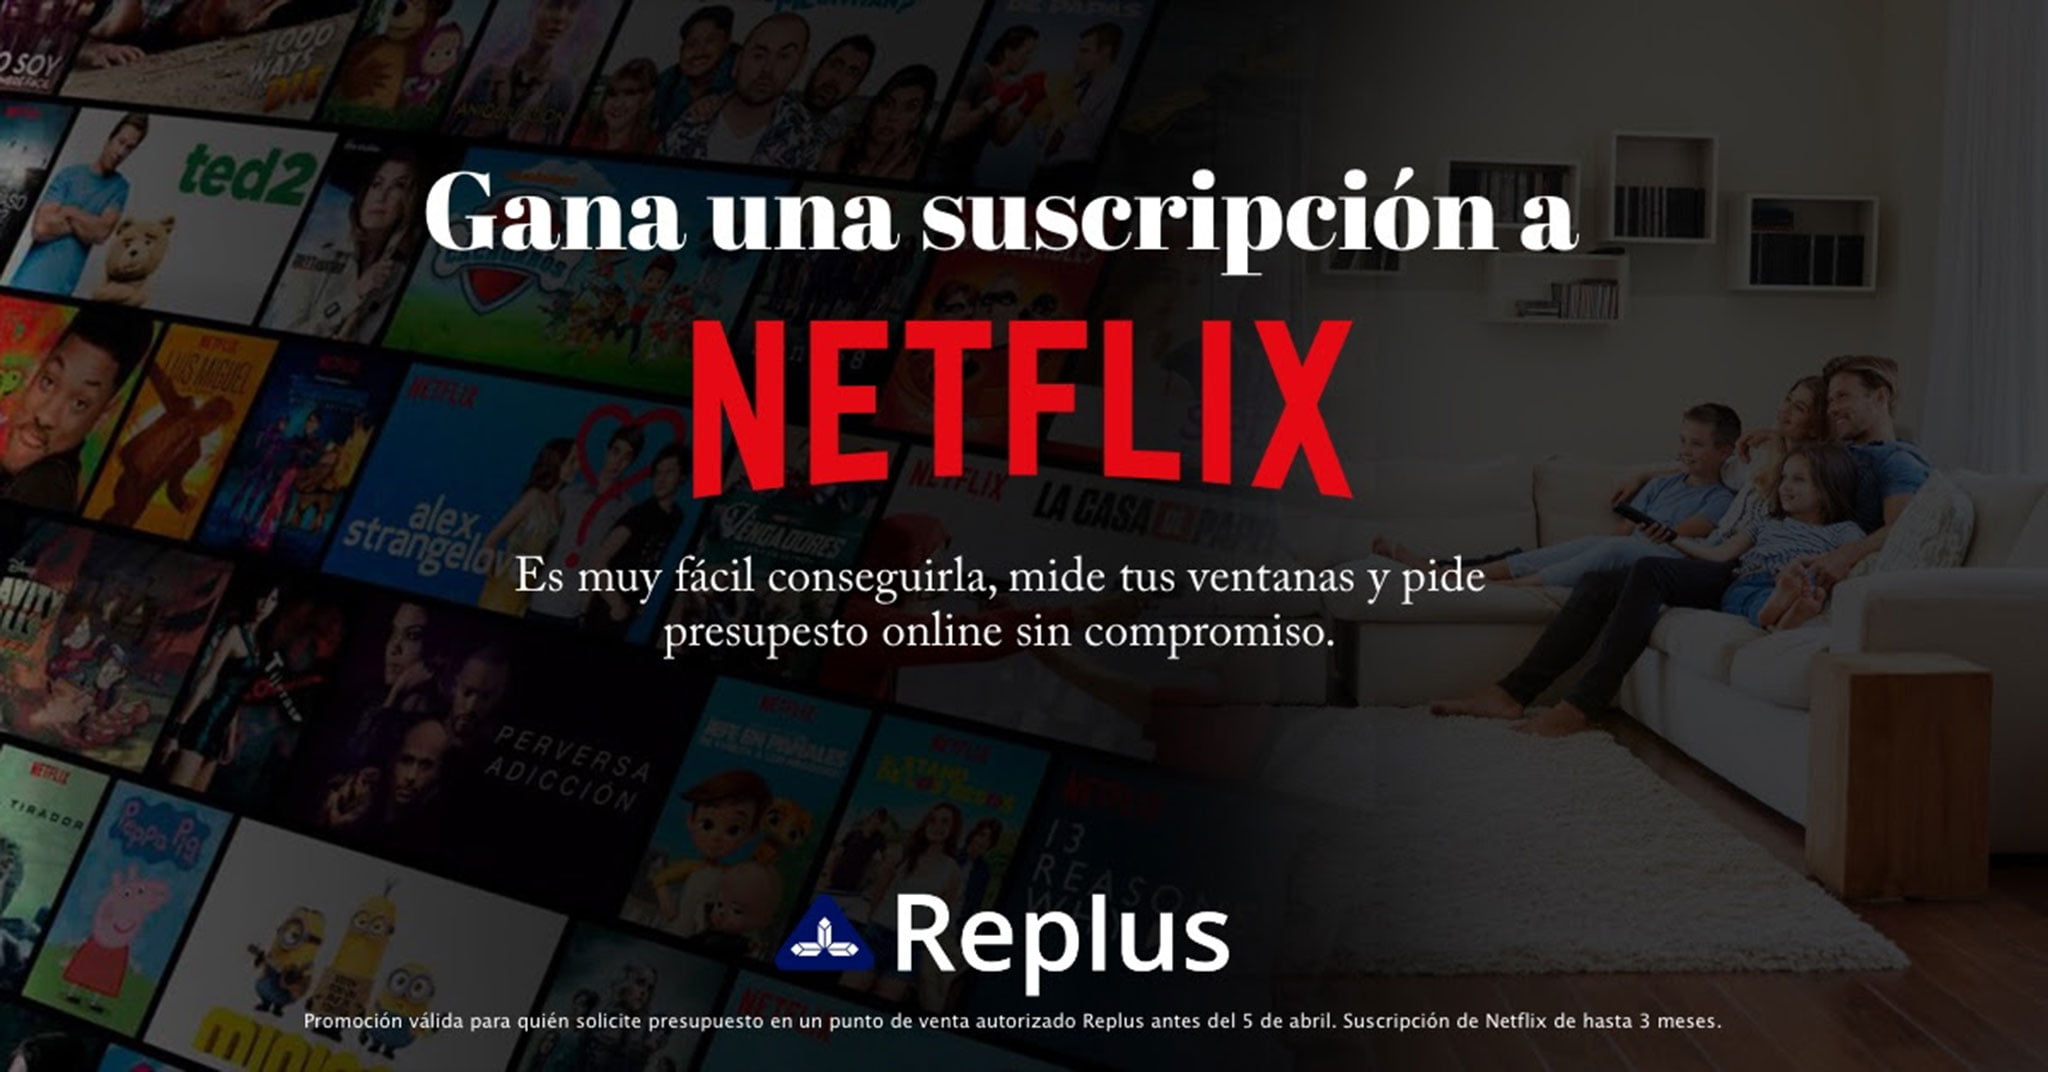 Gana una de las tres suscripciones a Netflix que sortea la marca de ventanas Replus – Hermética